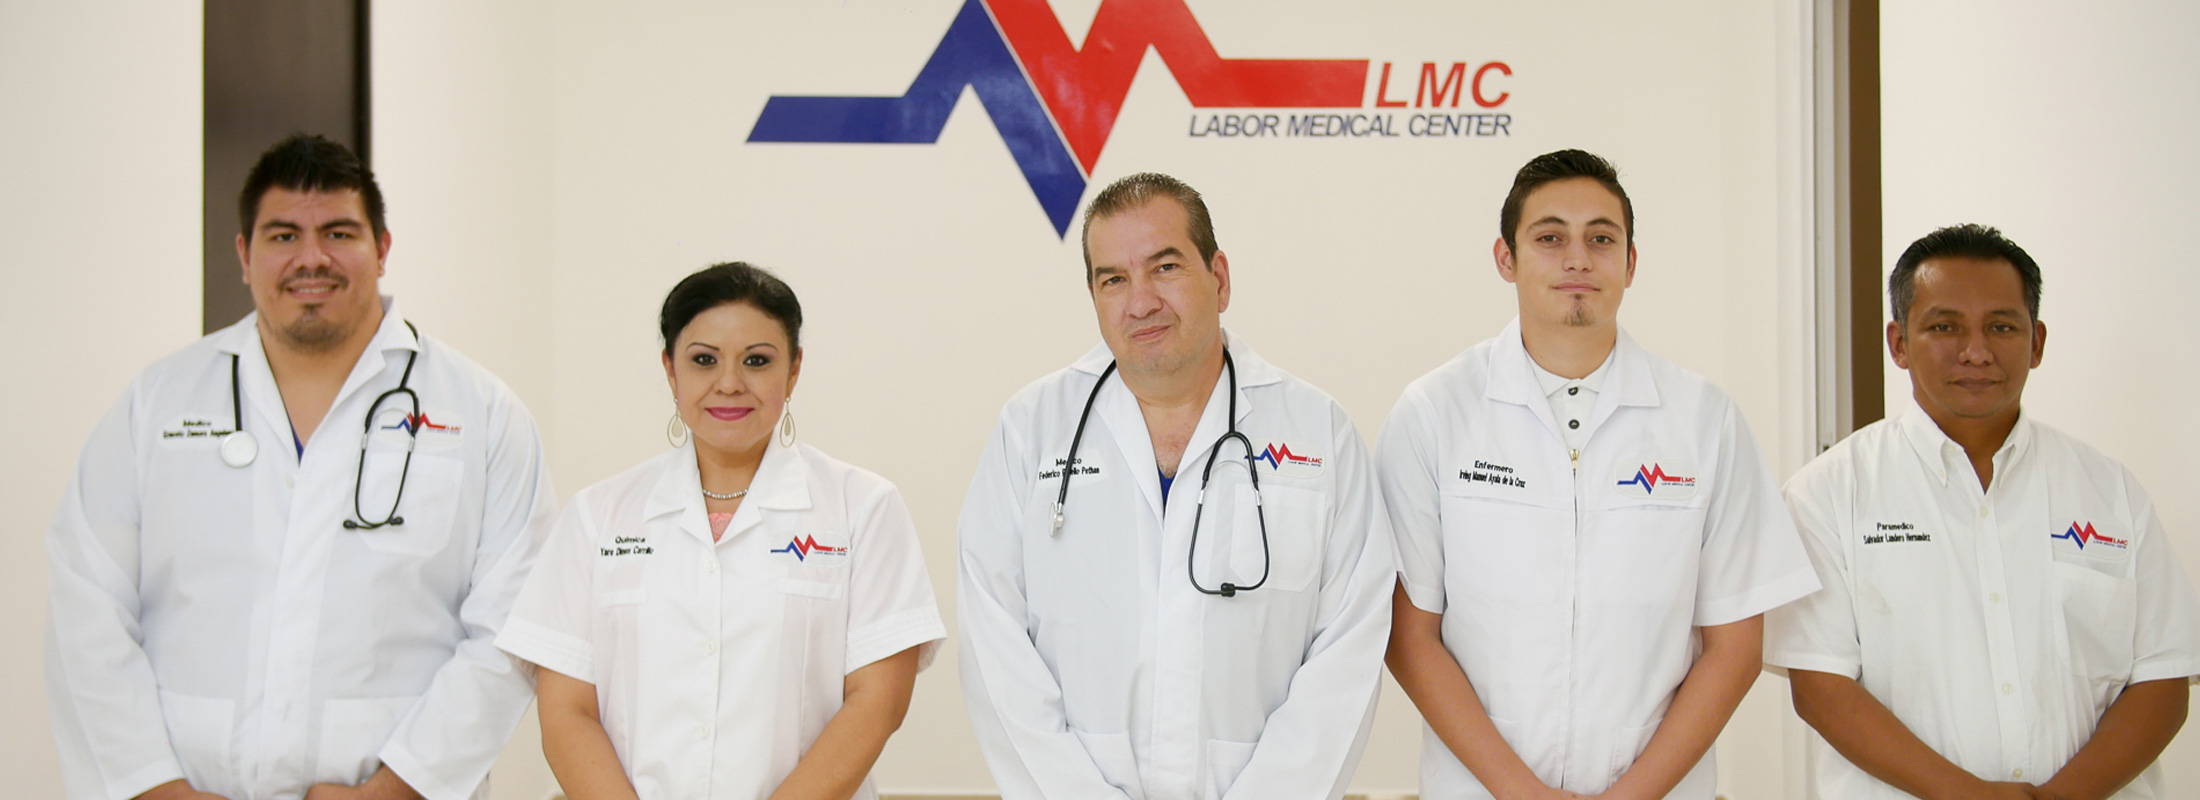 Labor Medical Center